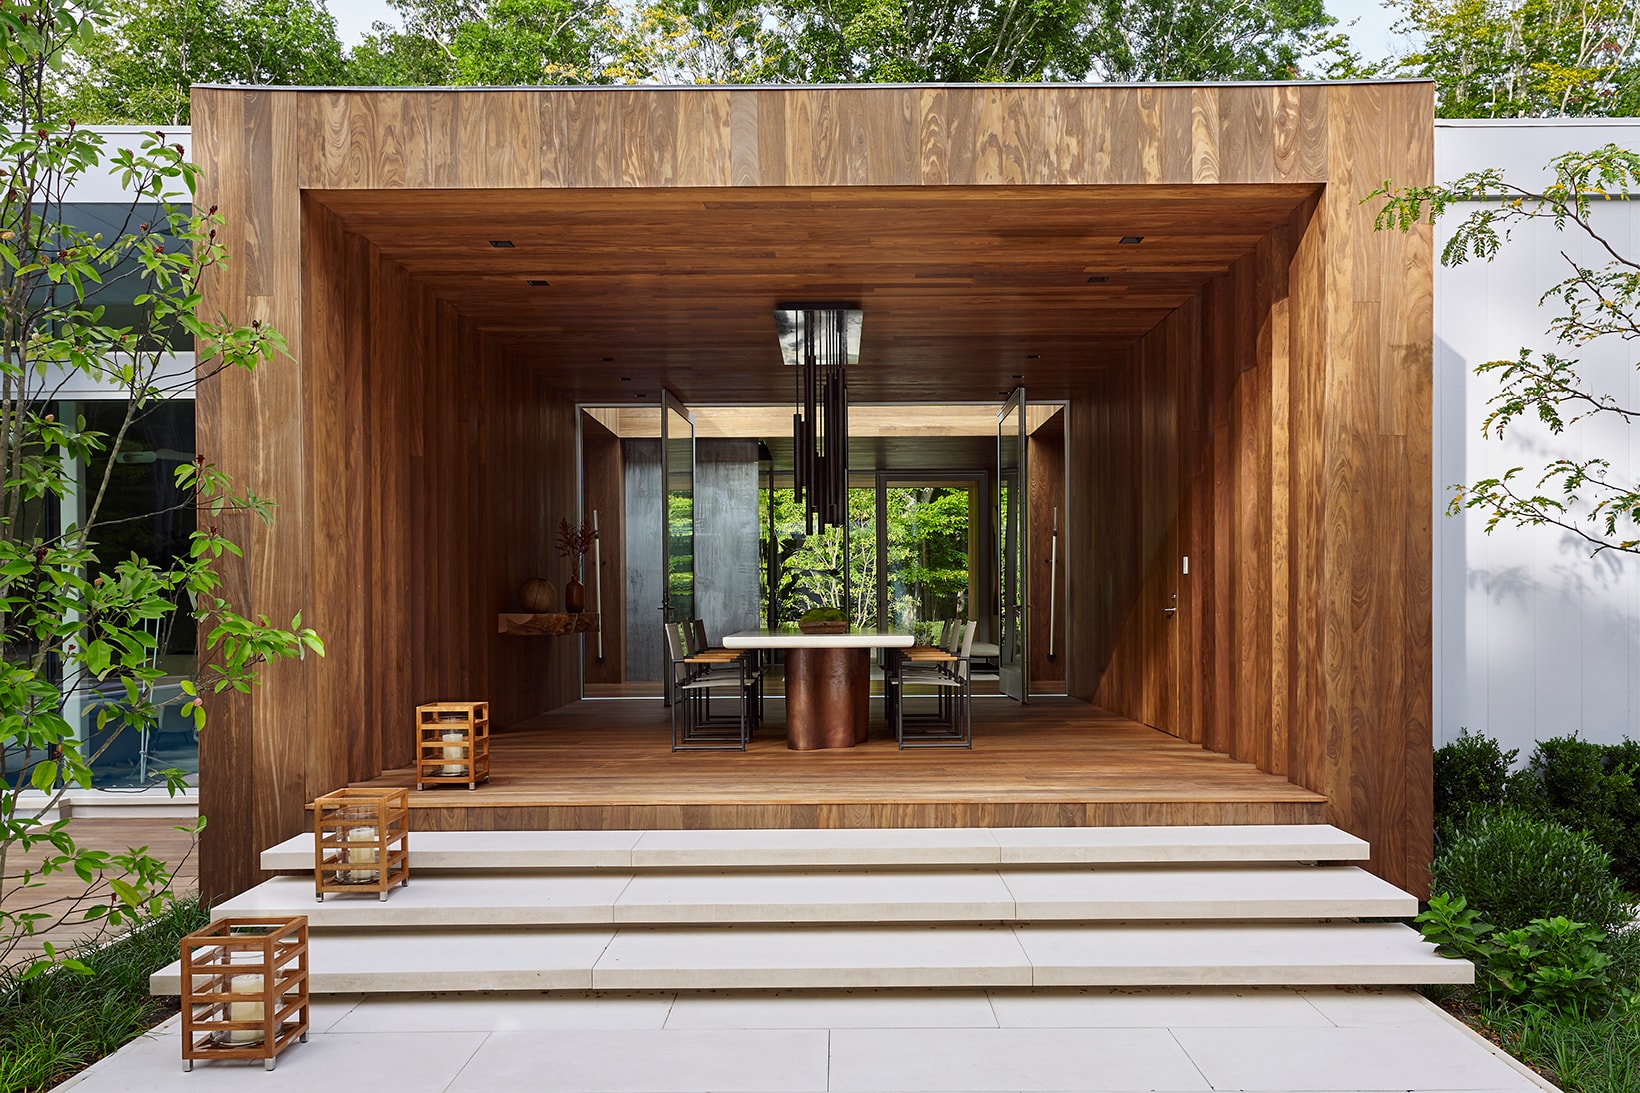 Blaze Makoid Old Orchard Project East Hampton New York City Homes Architecture Design